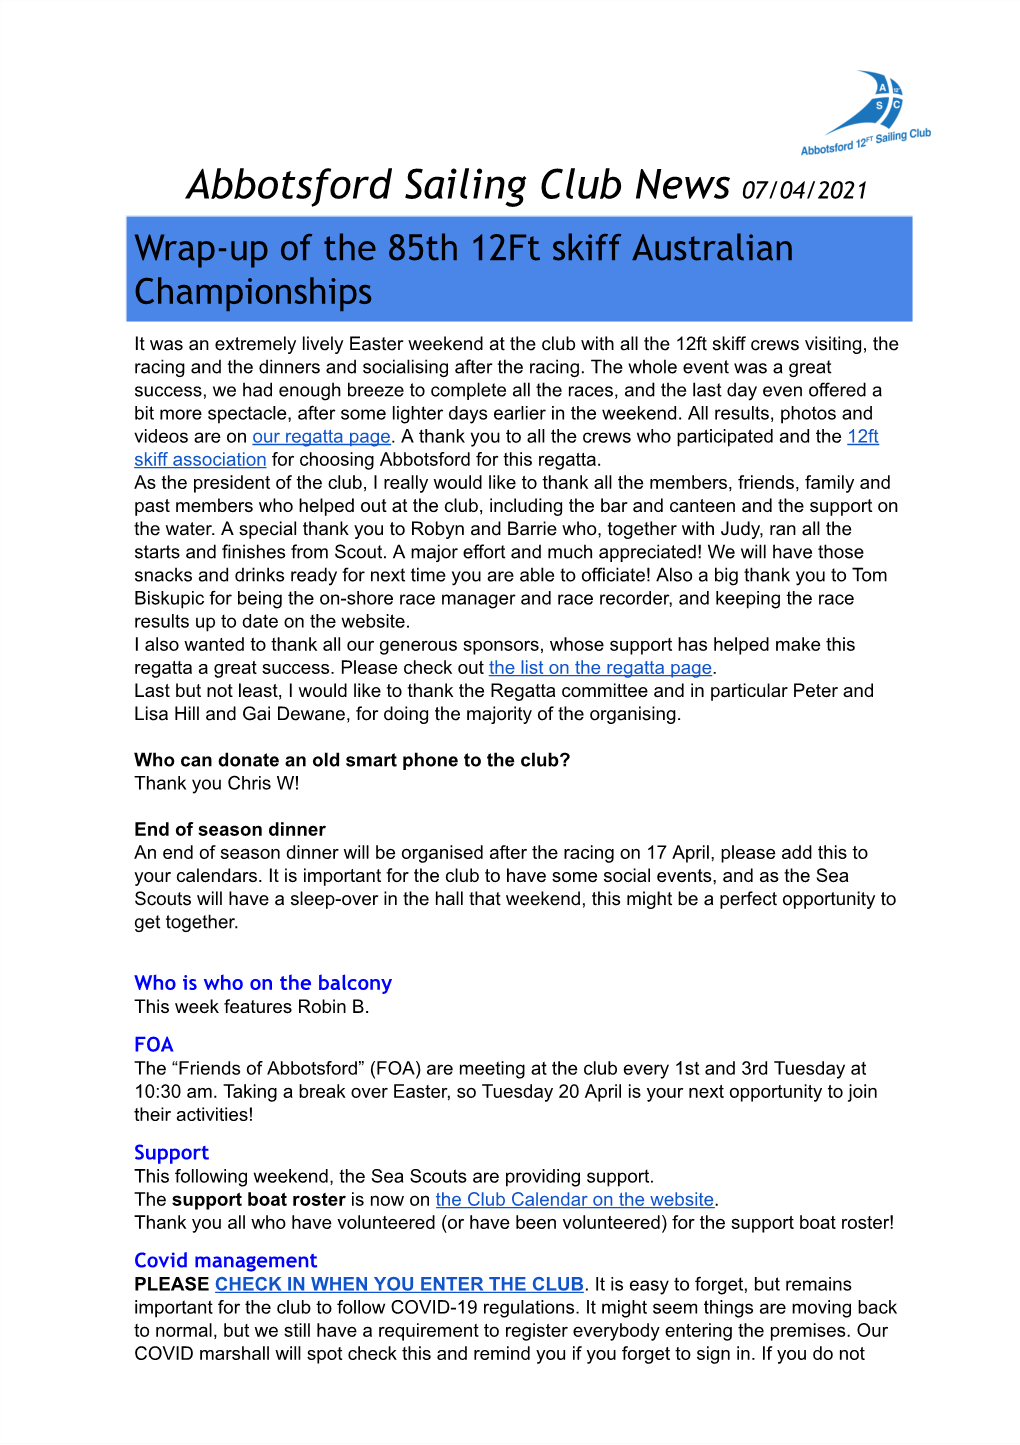 Abbotsford Sailing Club News 0 7/04/2021 Wrap-Up of the 85Th 12Ft Skiff Australian Championships